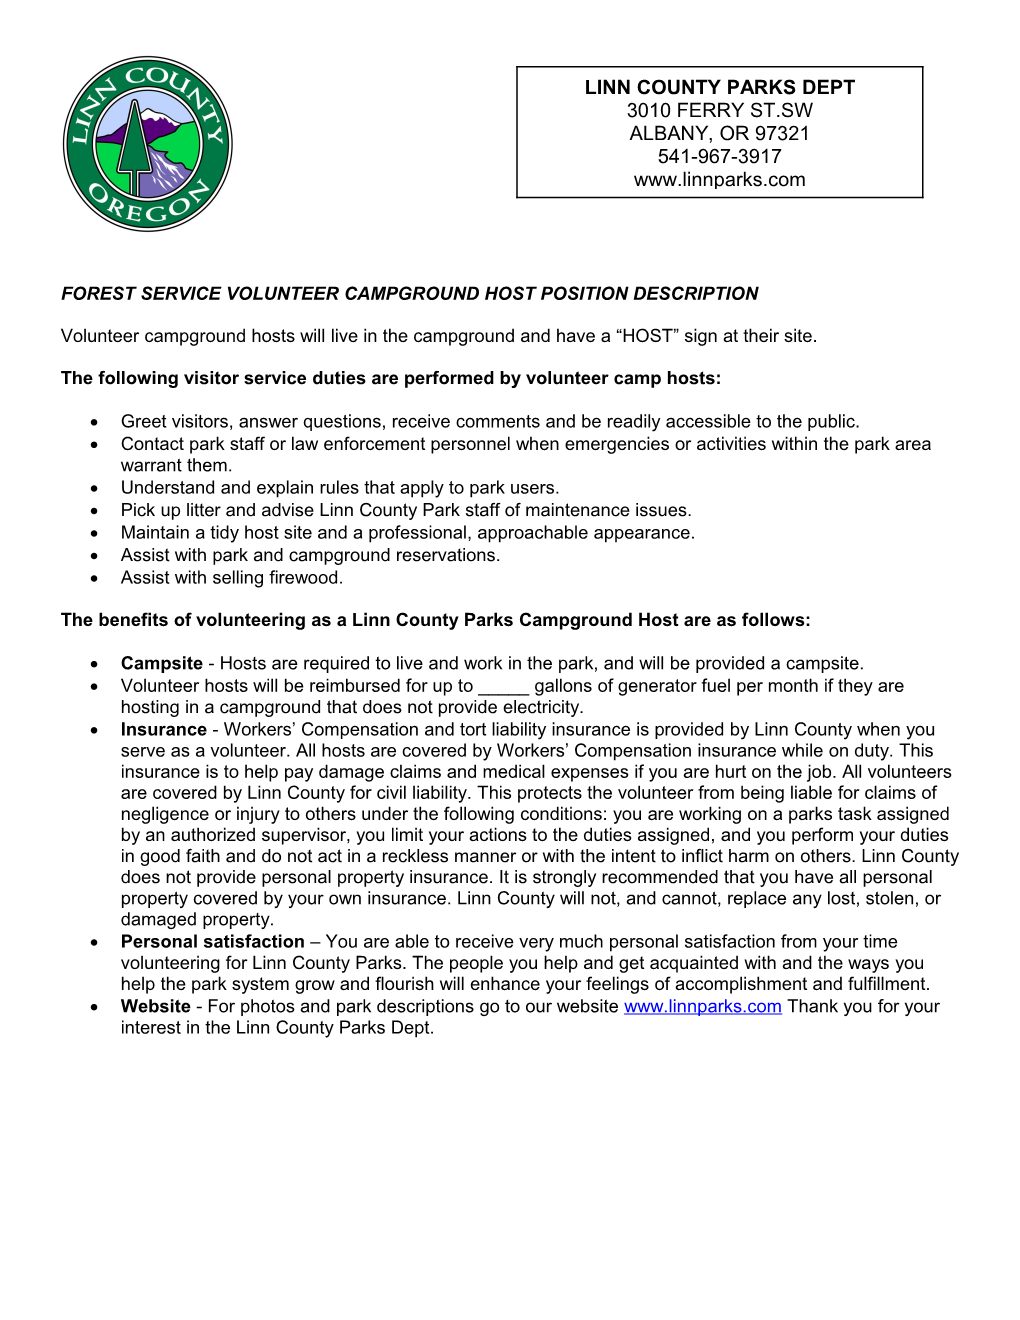 Forest Service Volunteer Campground Host Position Description